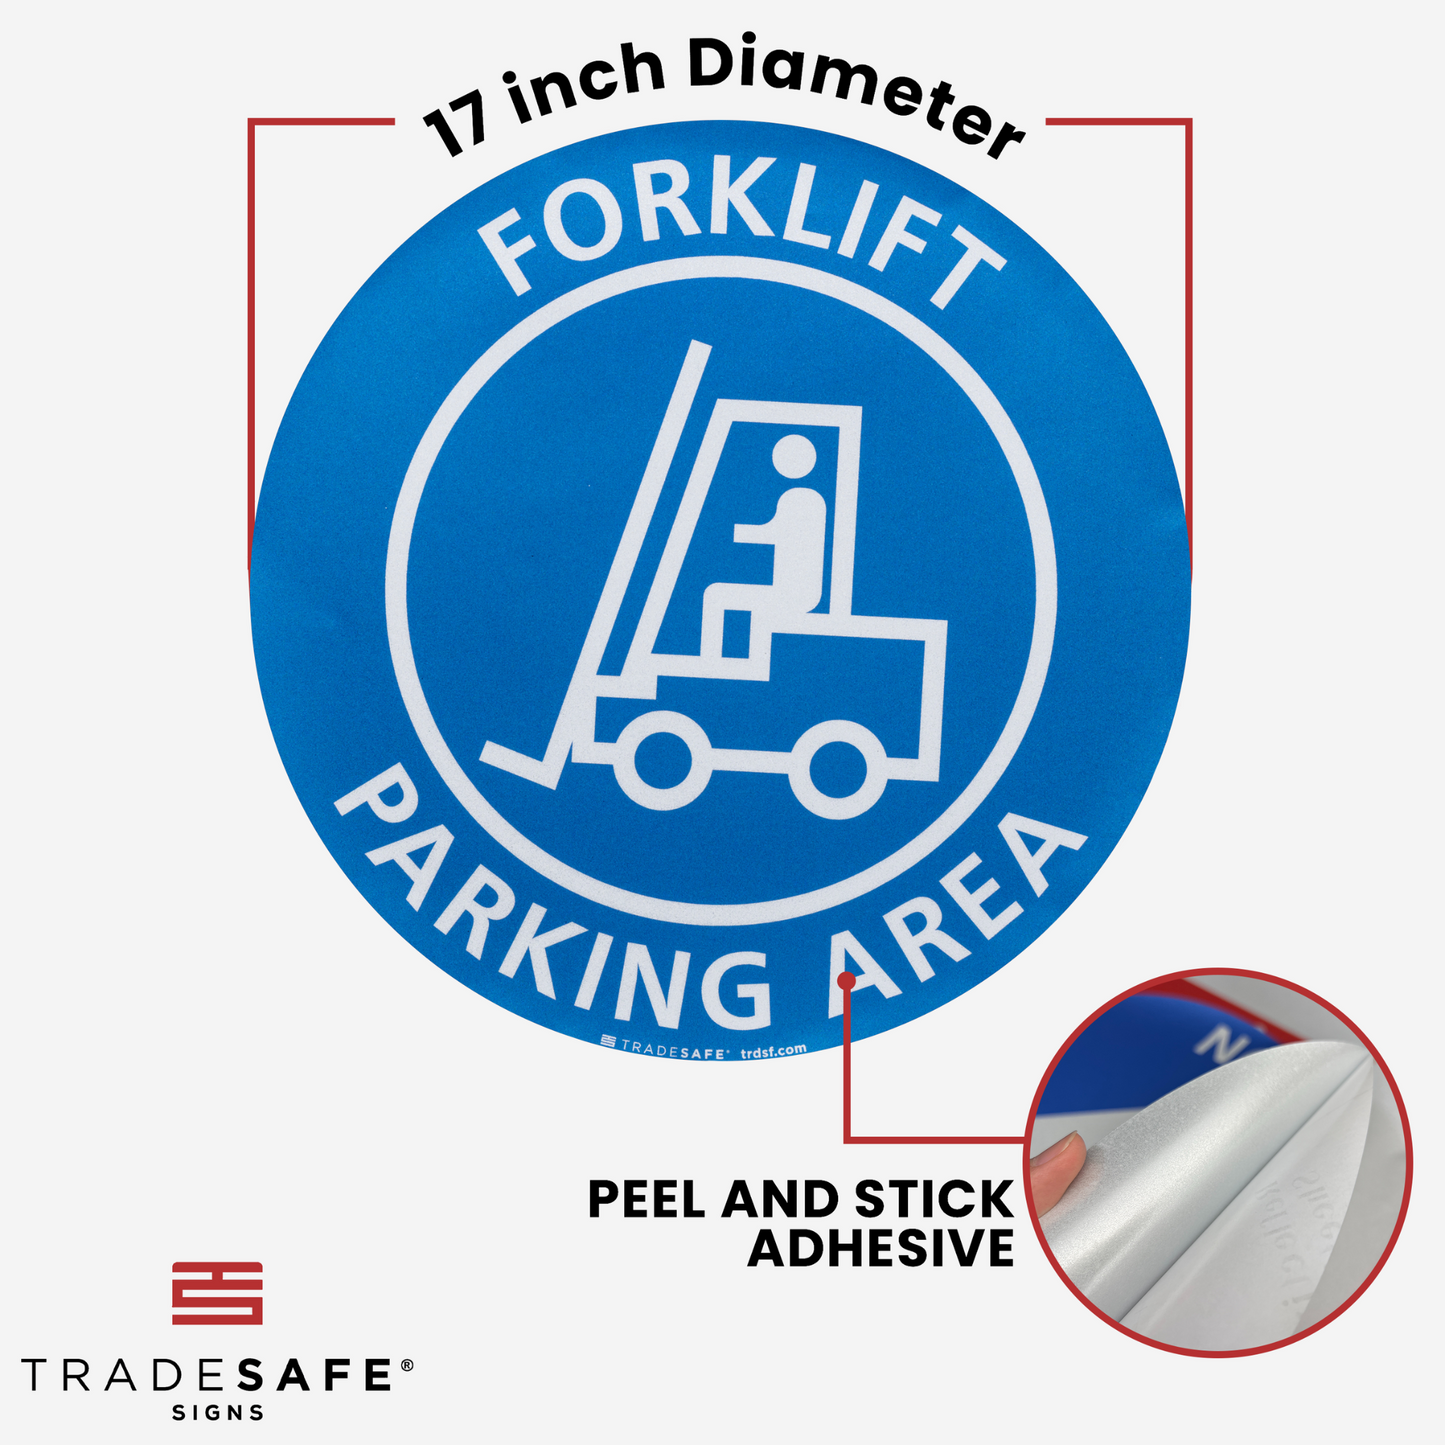 dimensions of forklift parking area sign